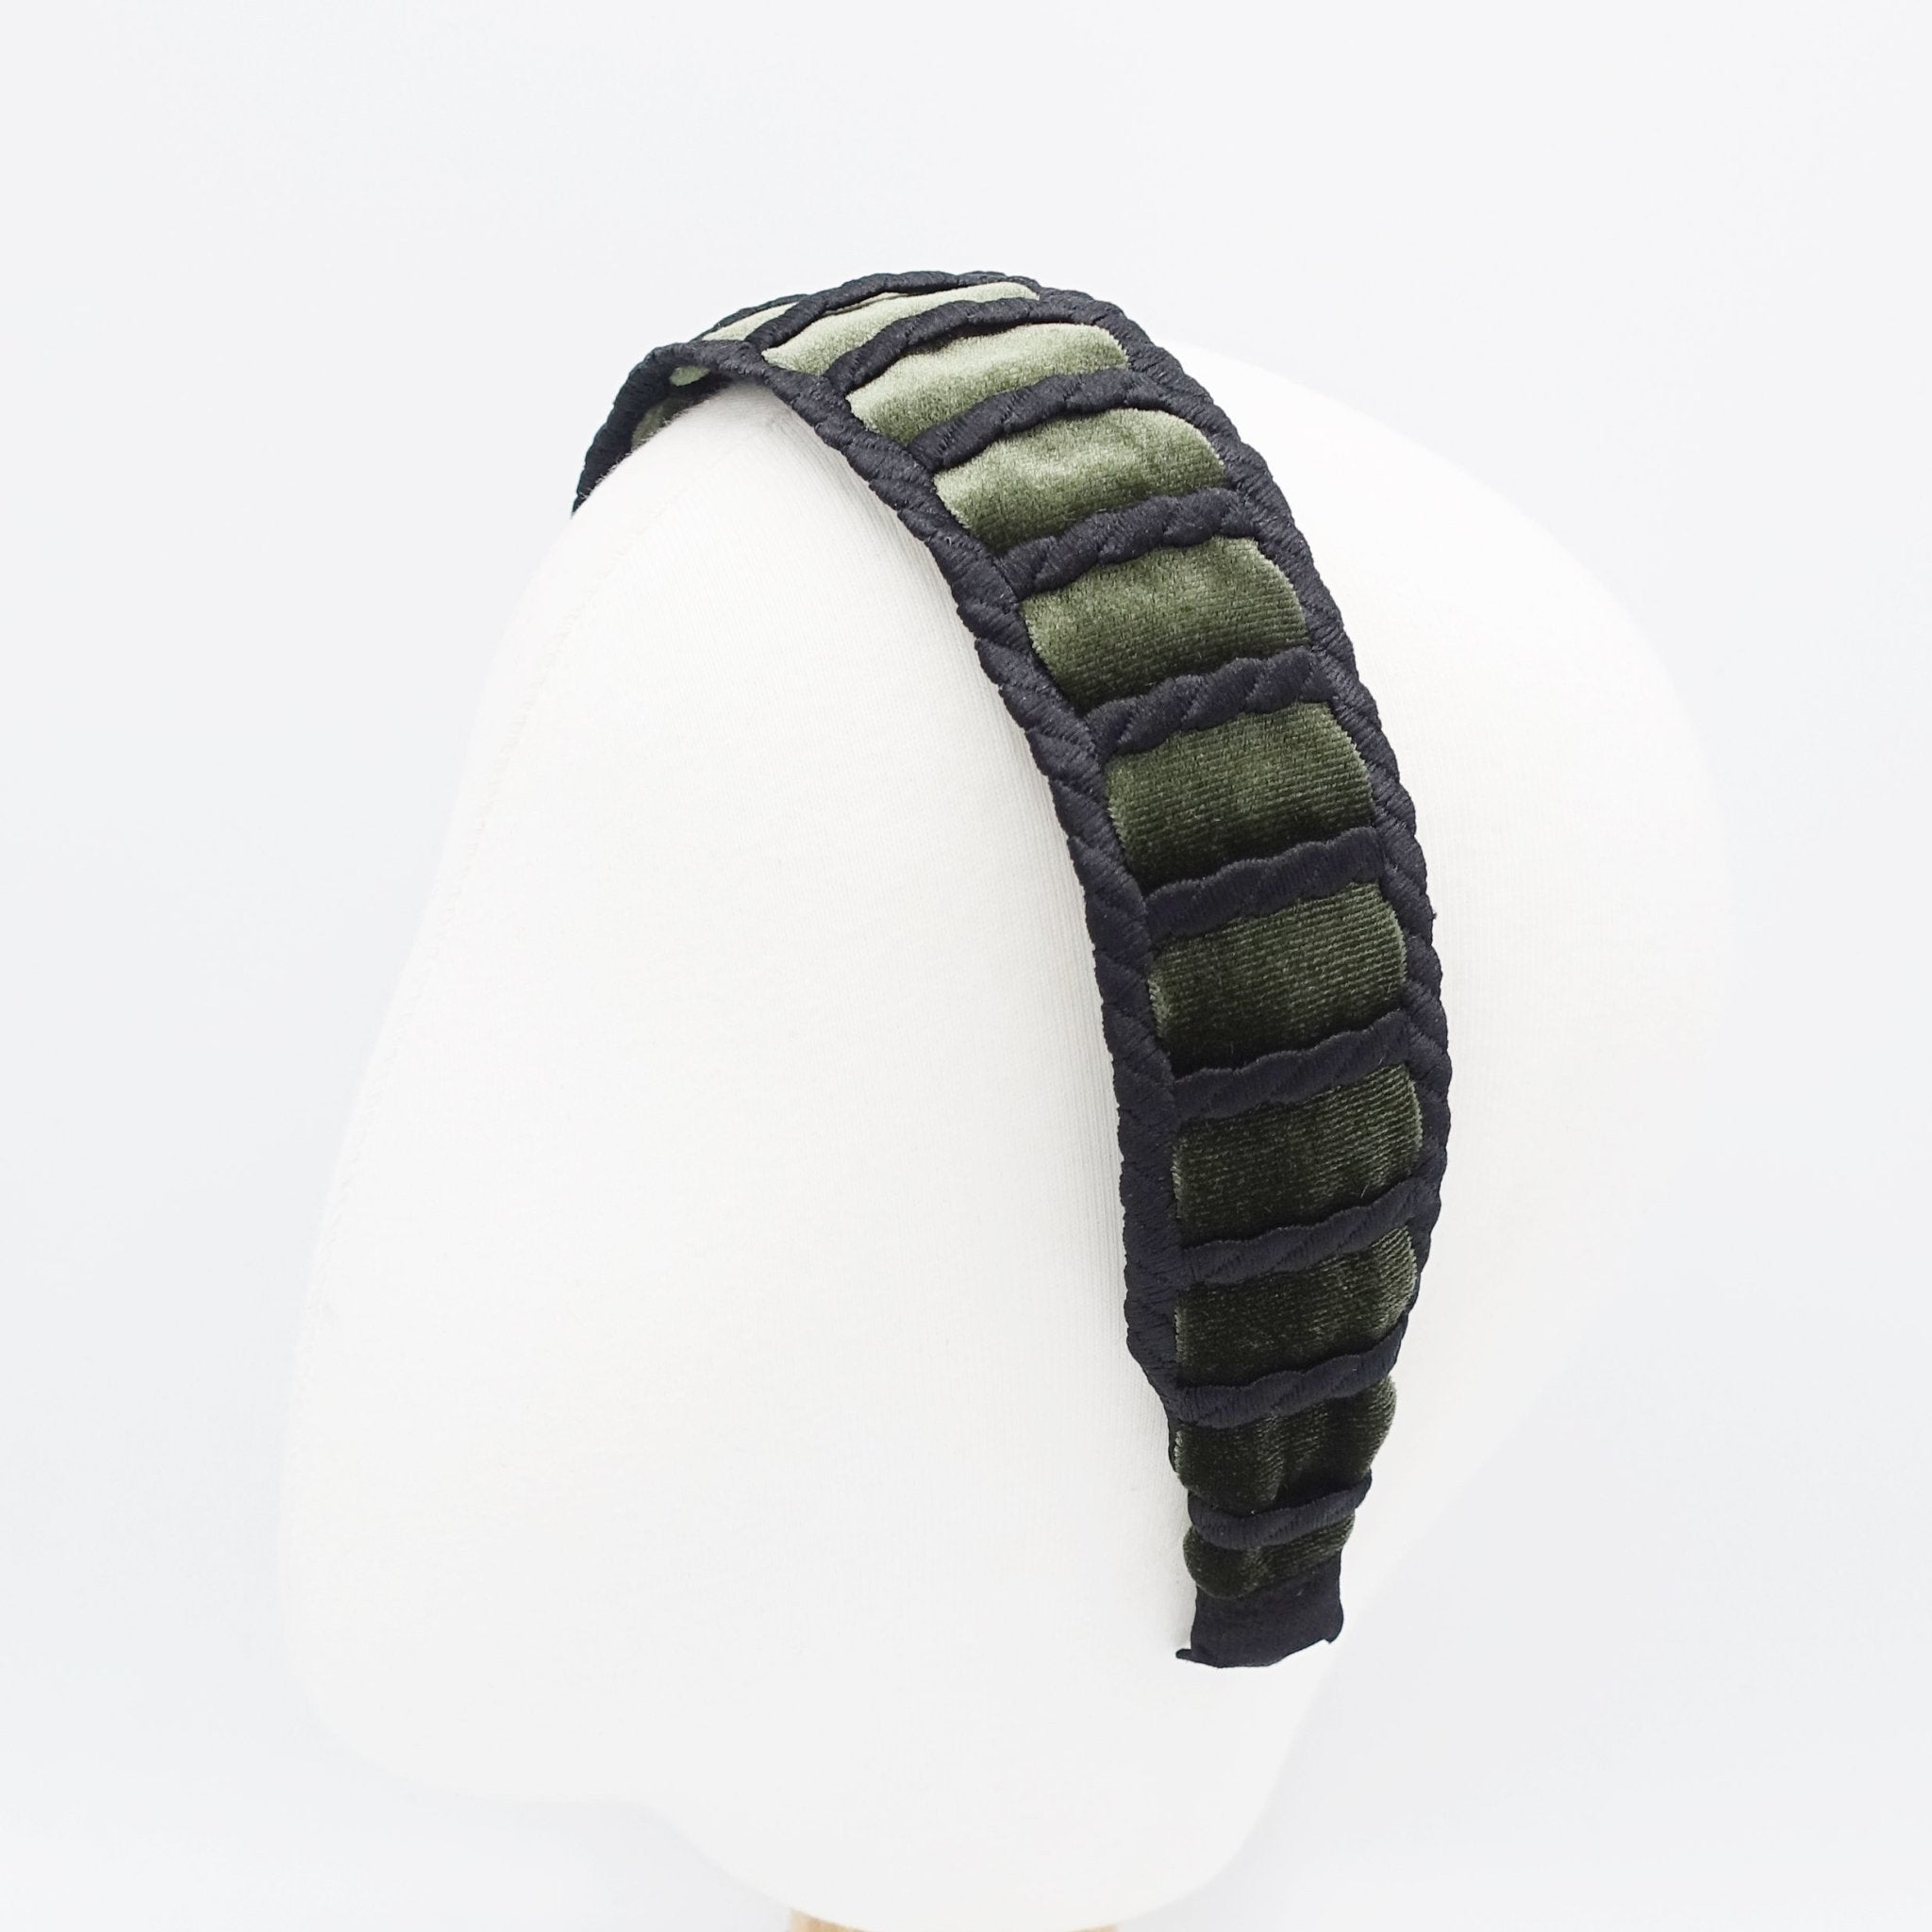 VeryShine velvet headband rectangle frame embellished hairband unique Fall Winter hair accessory for women